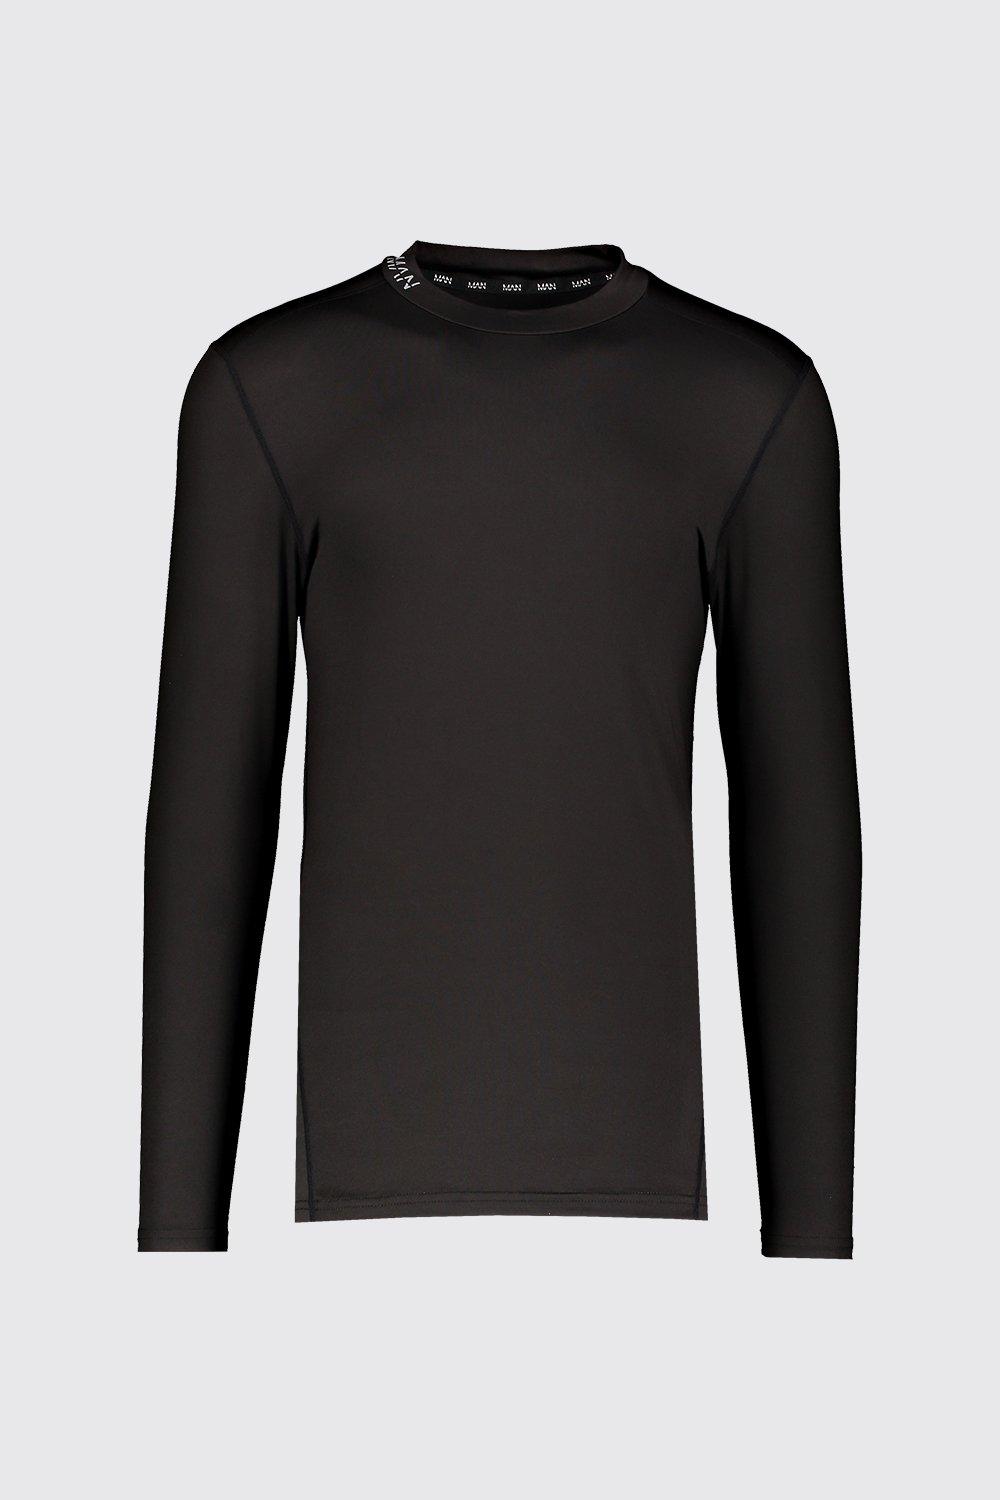 Long Sleeve Shirt Black  compression shirt black – BFIT Fashion